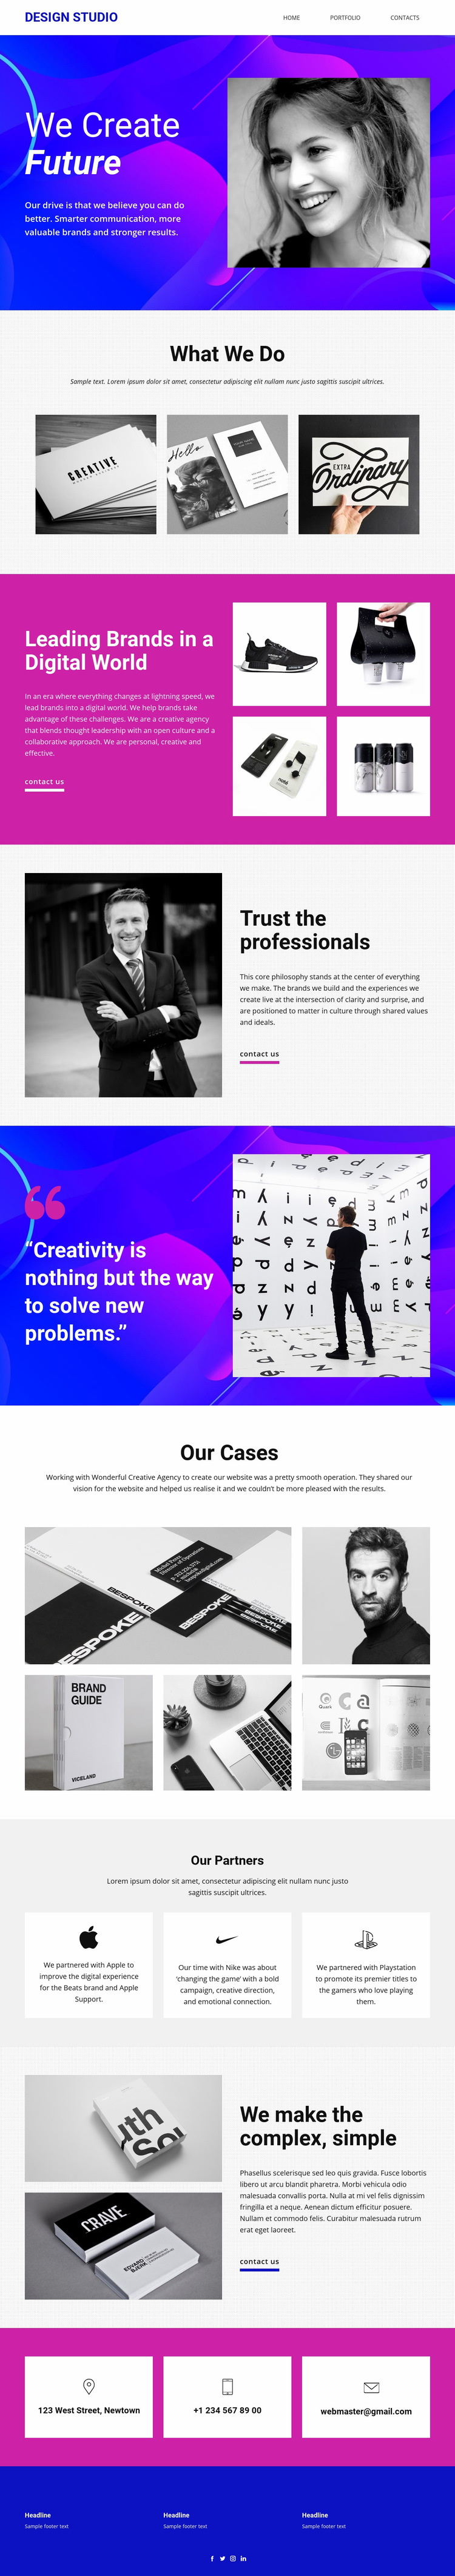 We develop the brand’s core Web Page Design